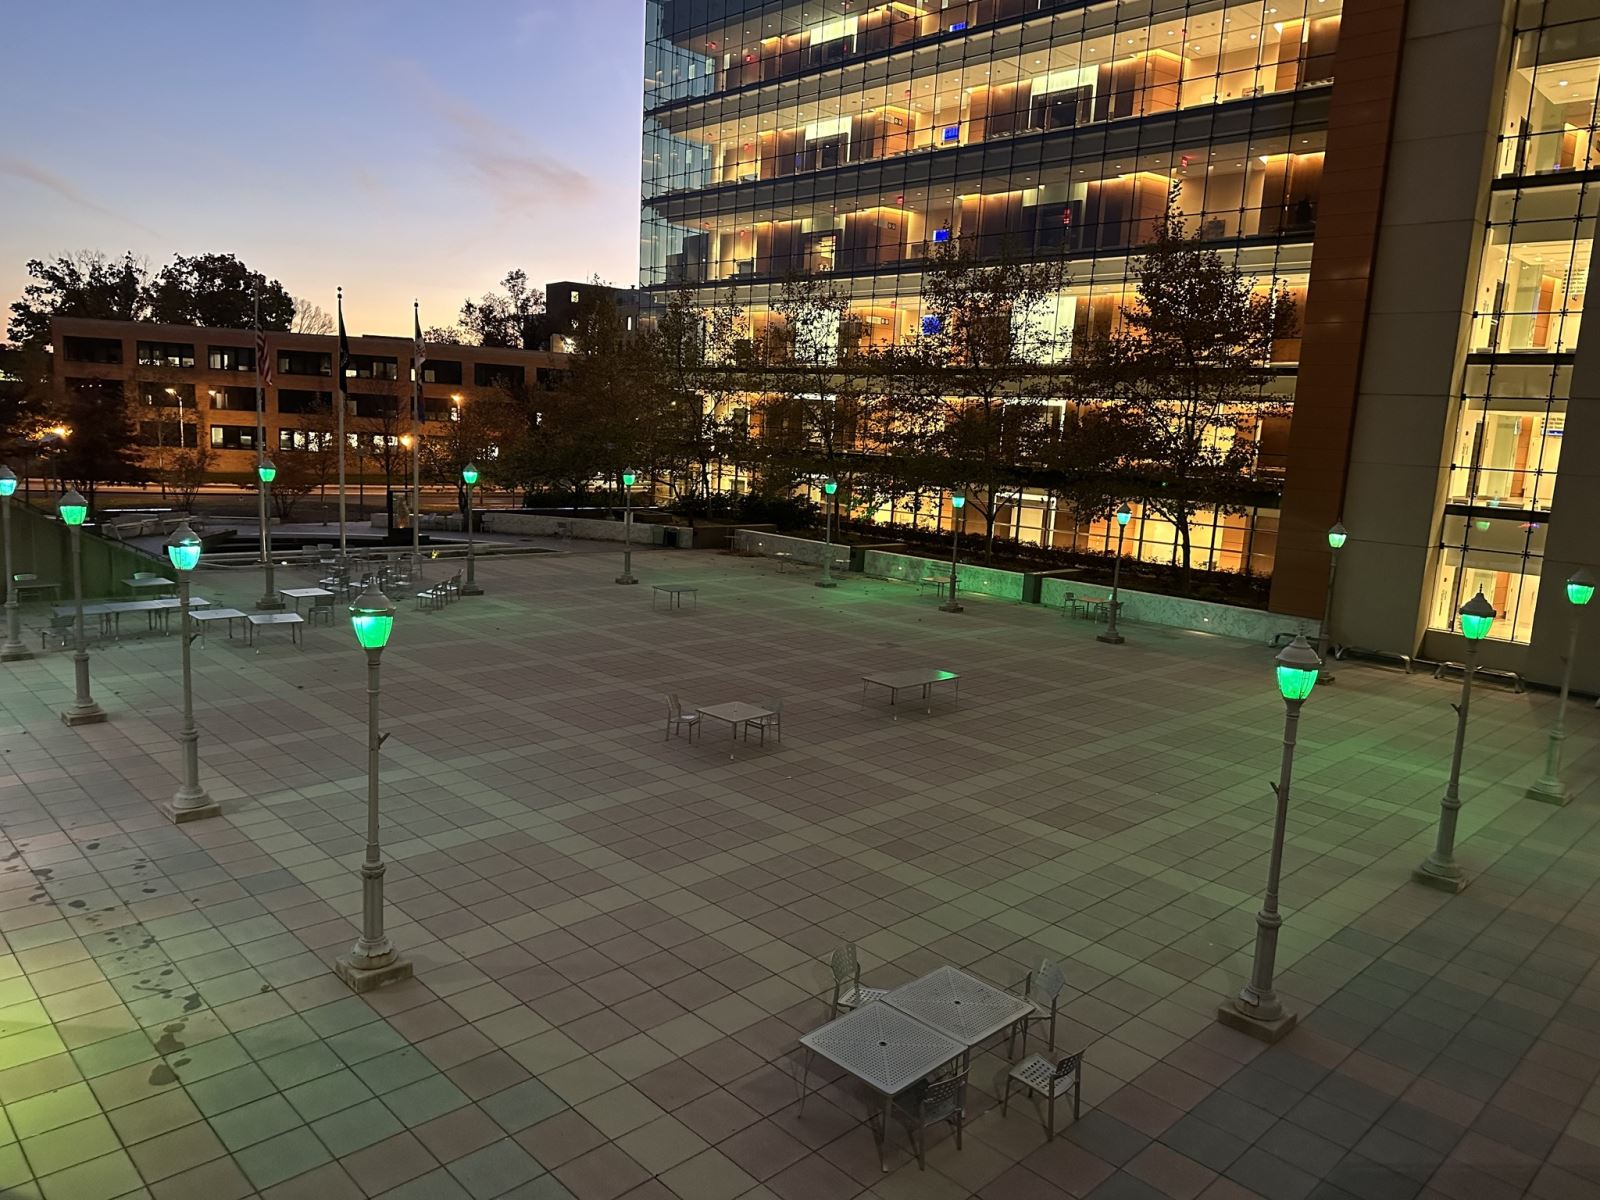 Operation Green Light - Memorial Plaza Lit Up In Green Lights